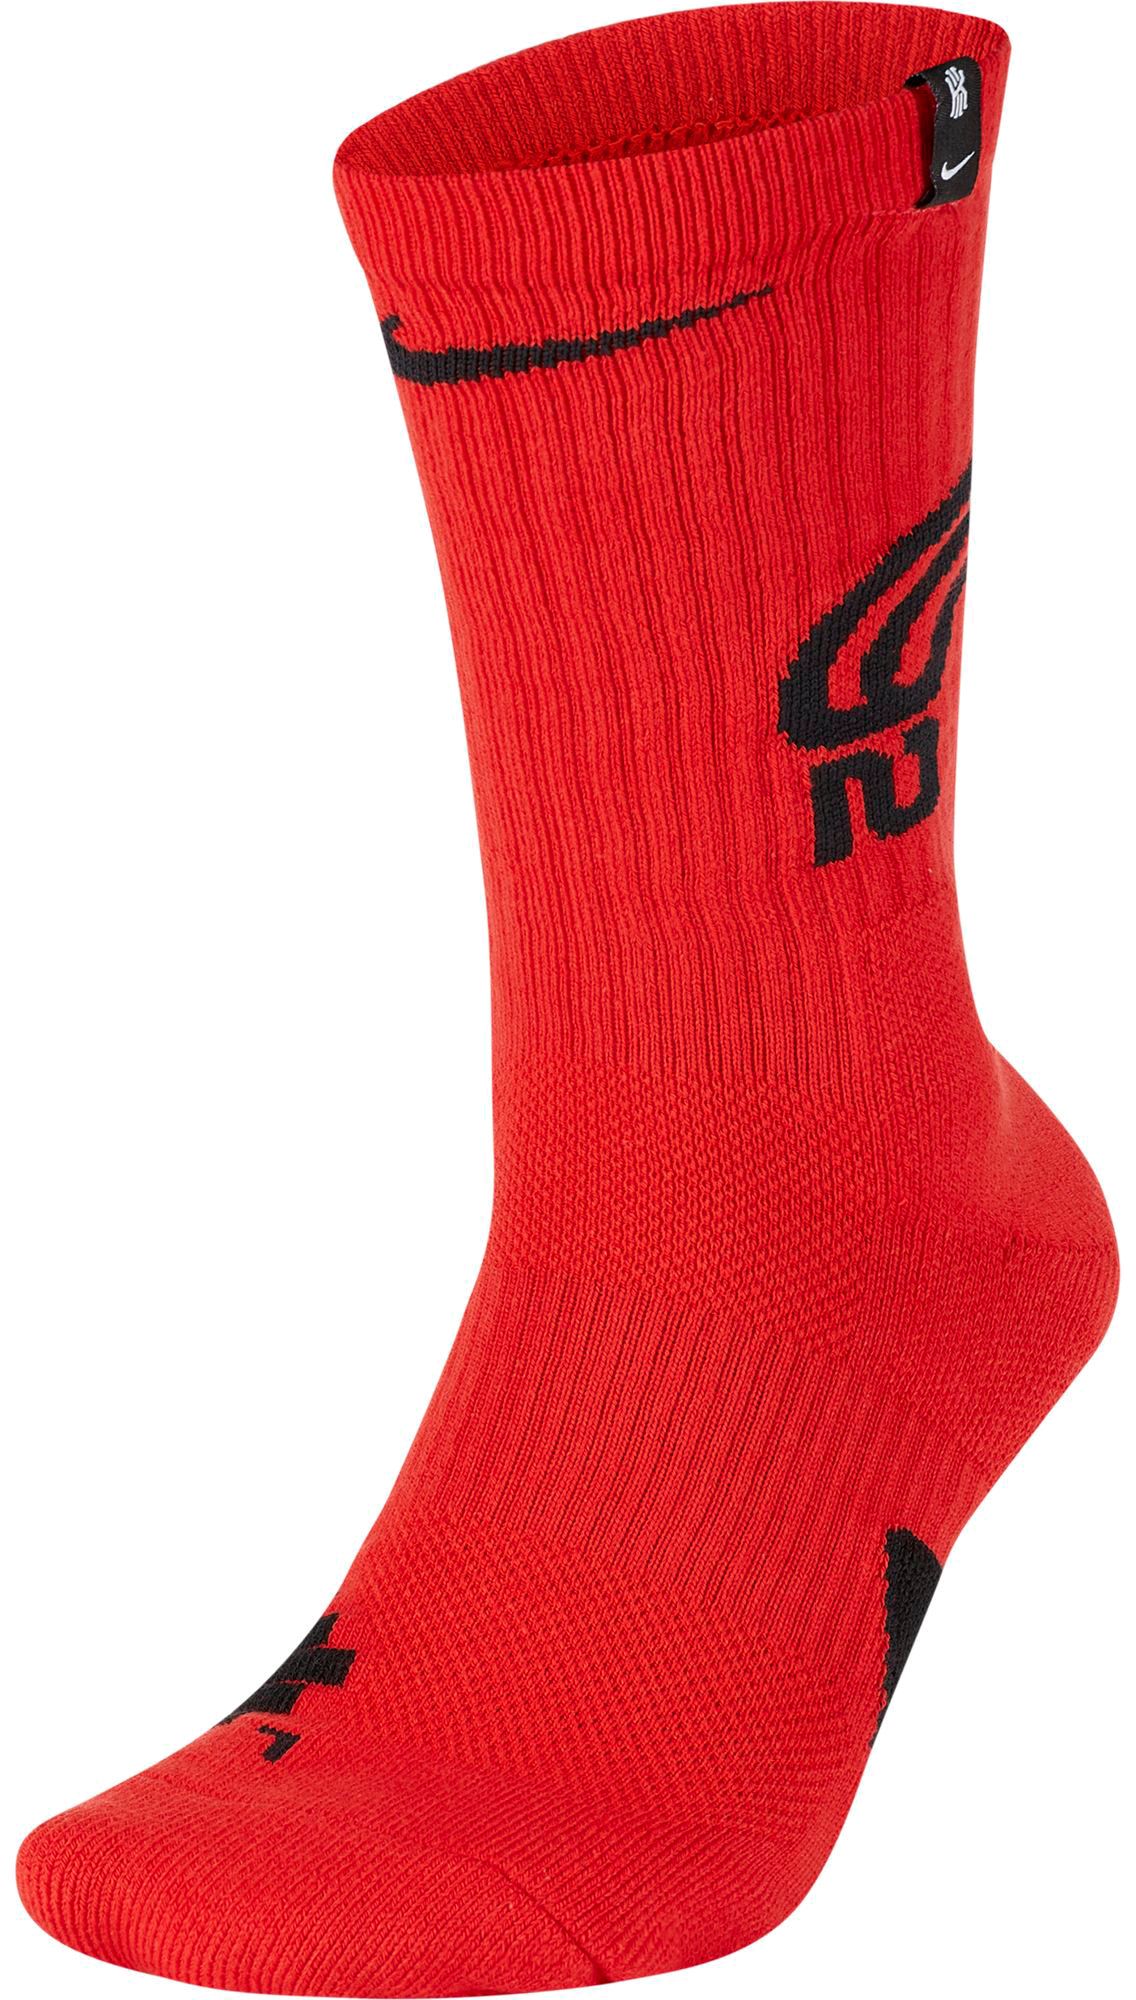 kyrie elite socks